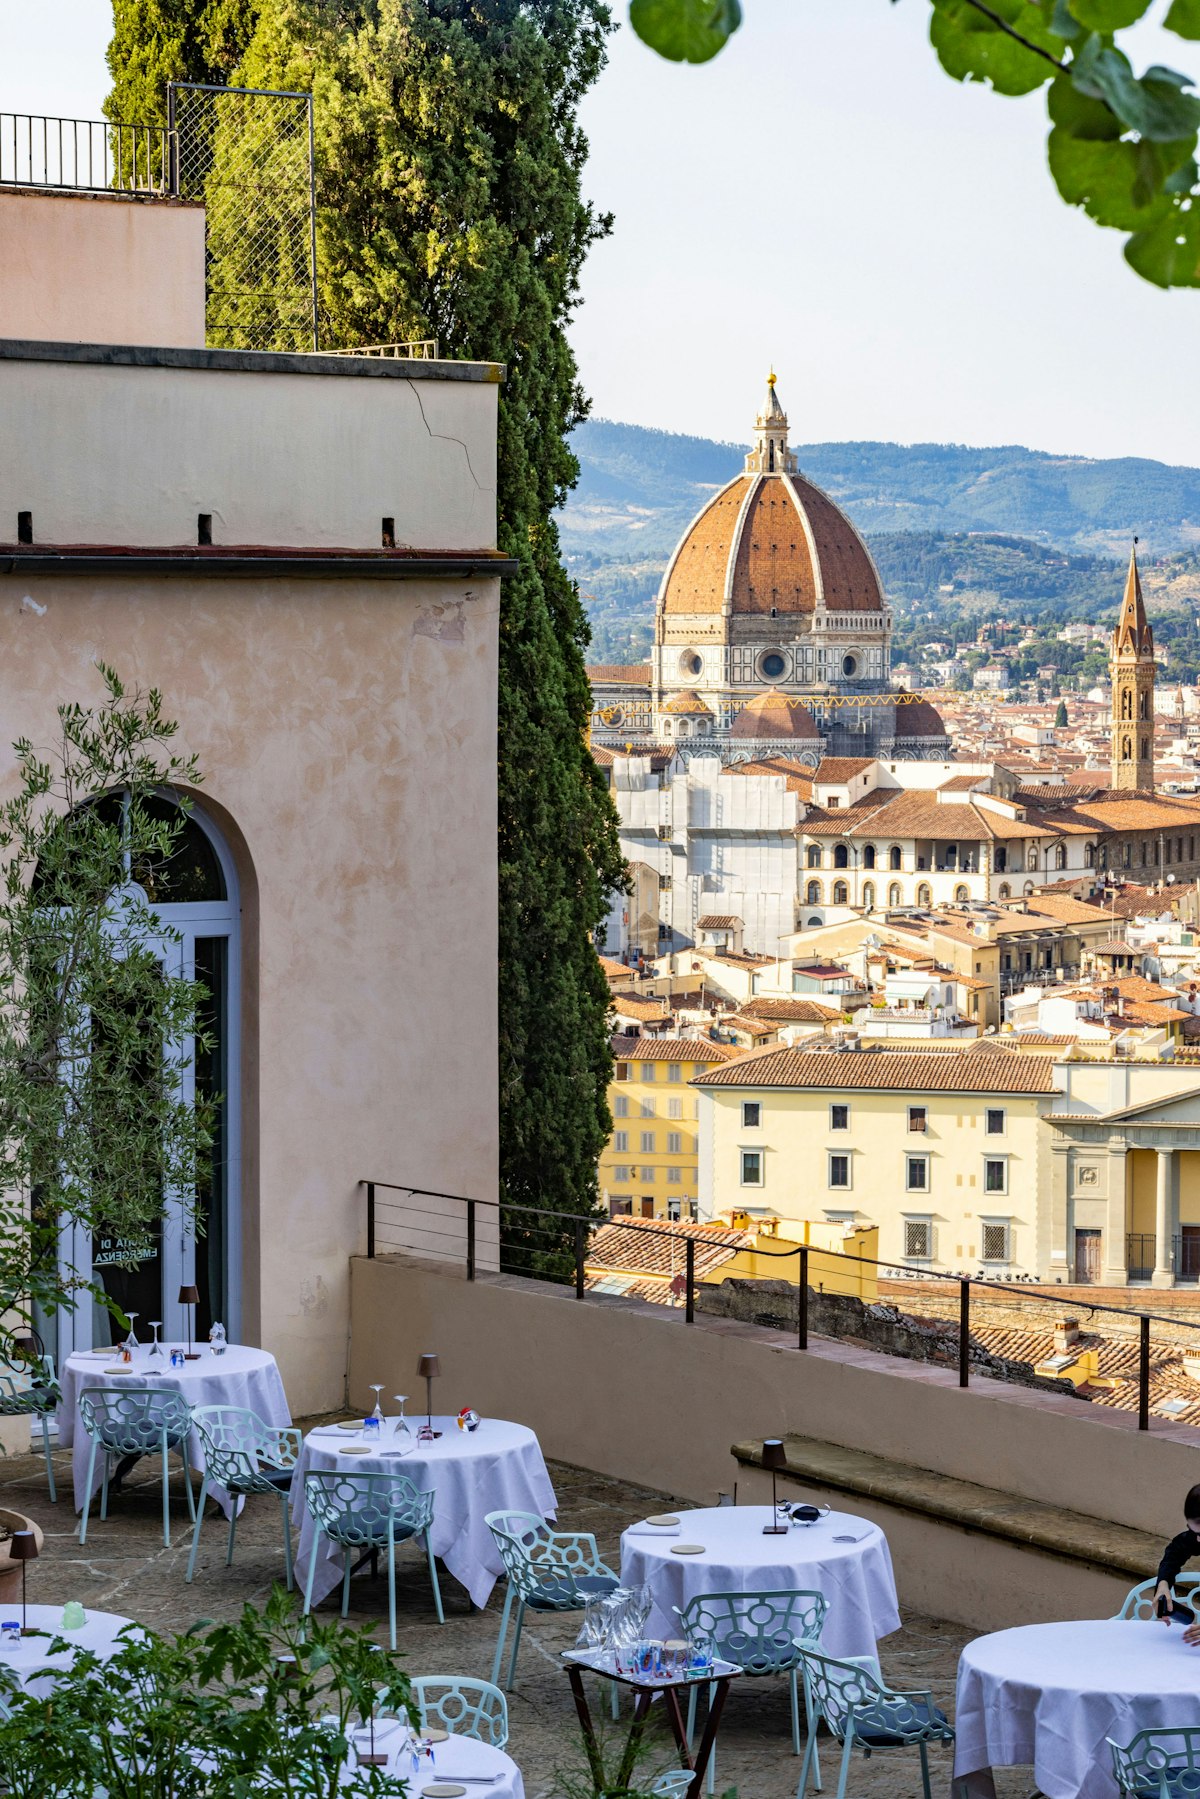 La Leggenda dei Frati Innovative takes on classic Italian cuisine in an elegant dining room & on a patio with city views.